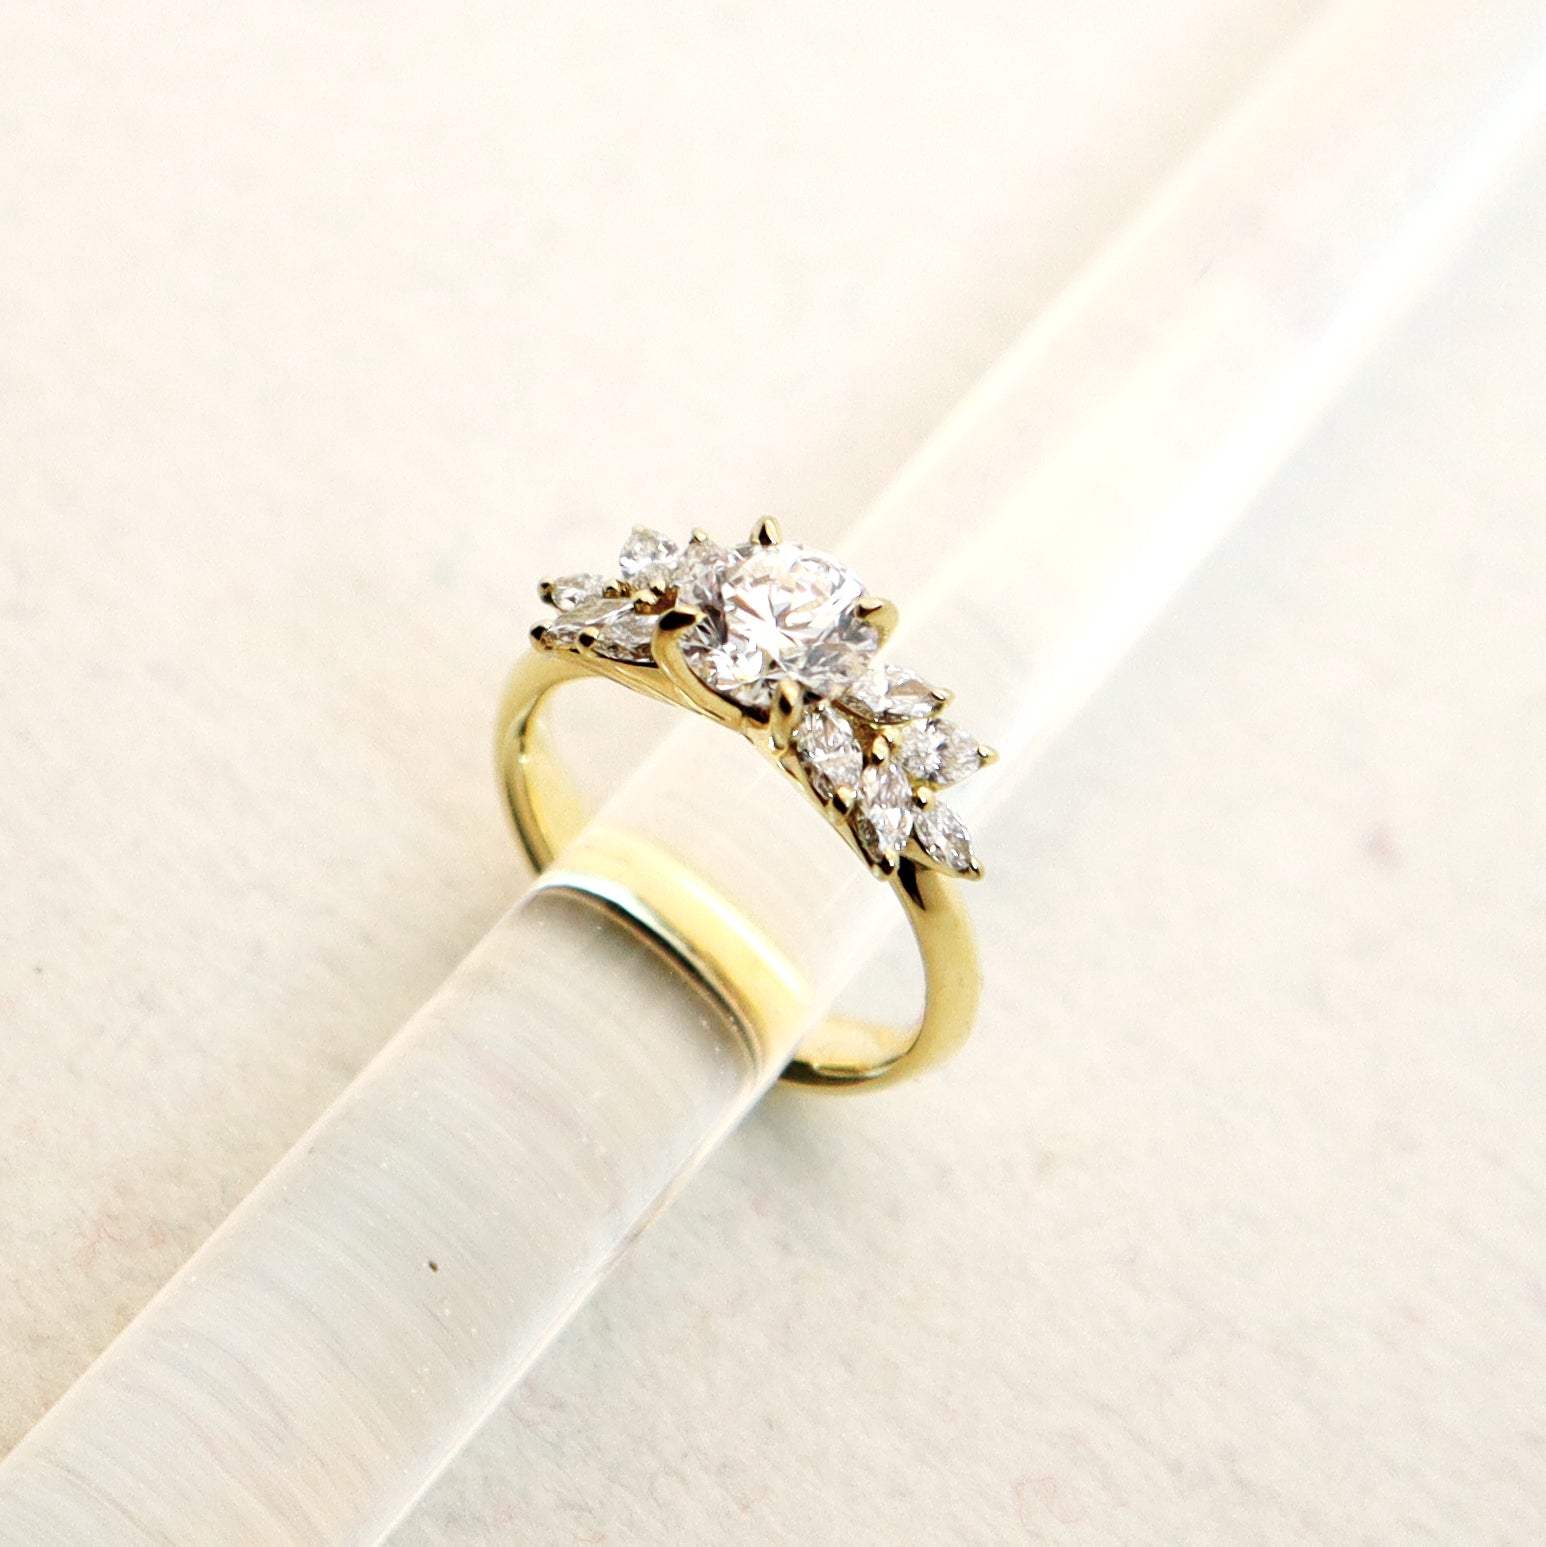 Custom gold and diamond engagment ring